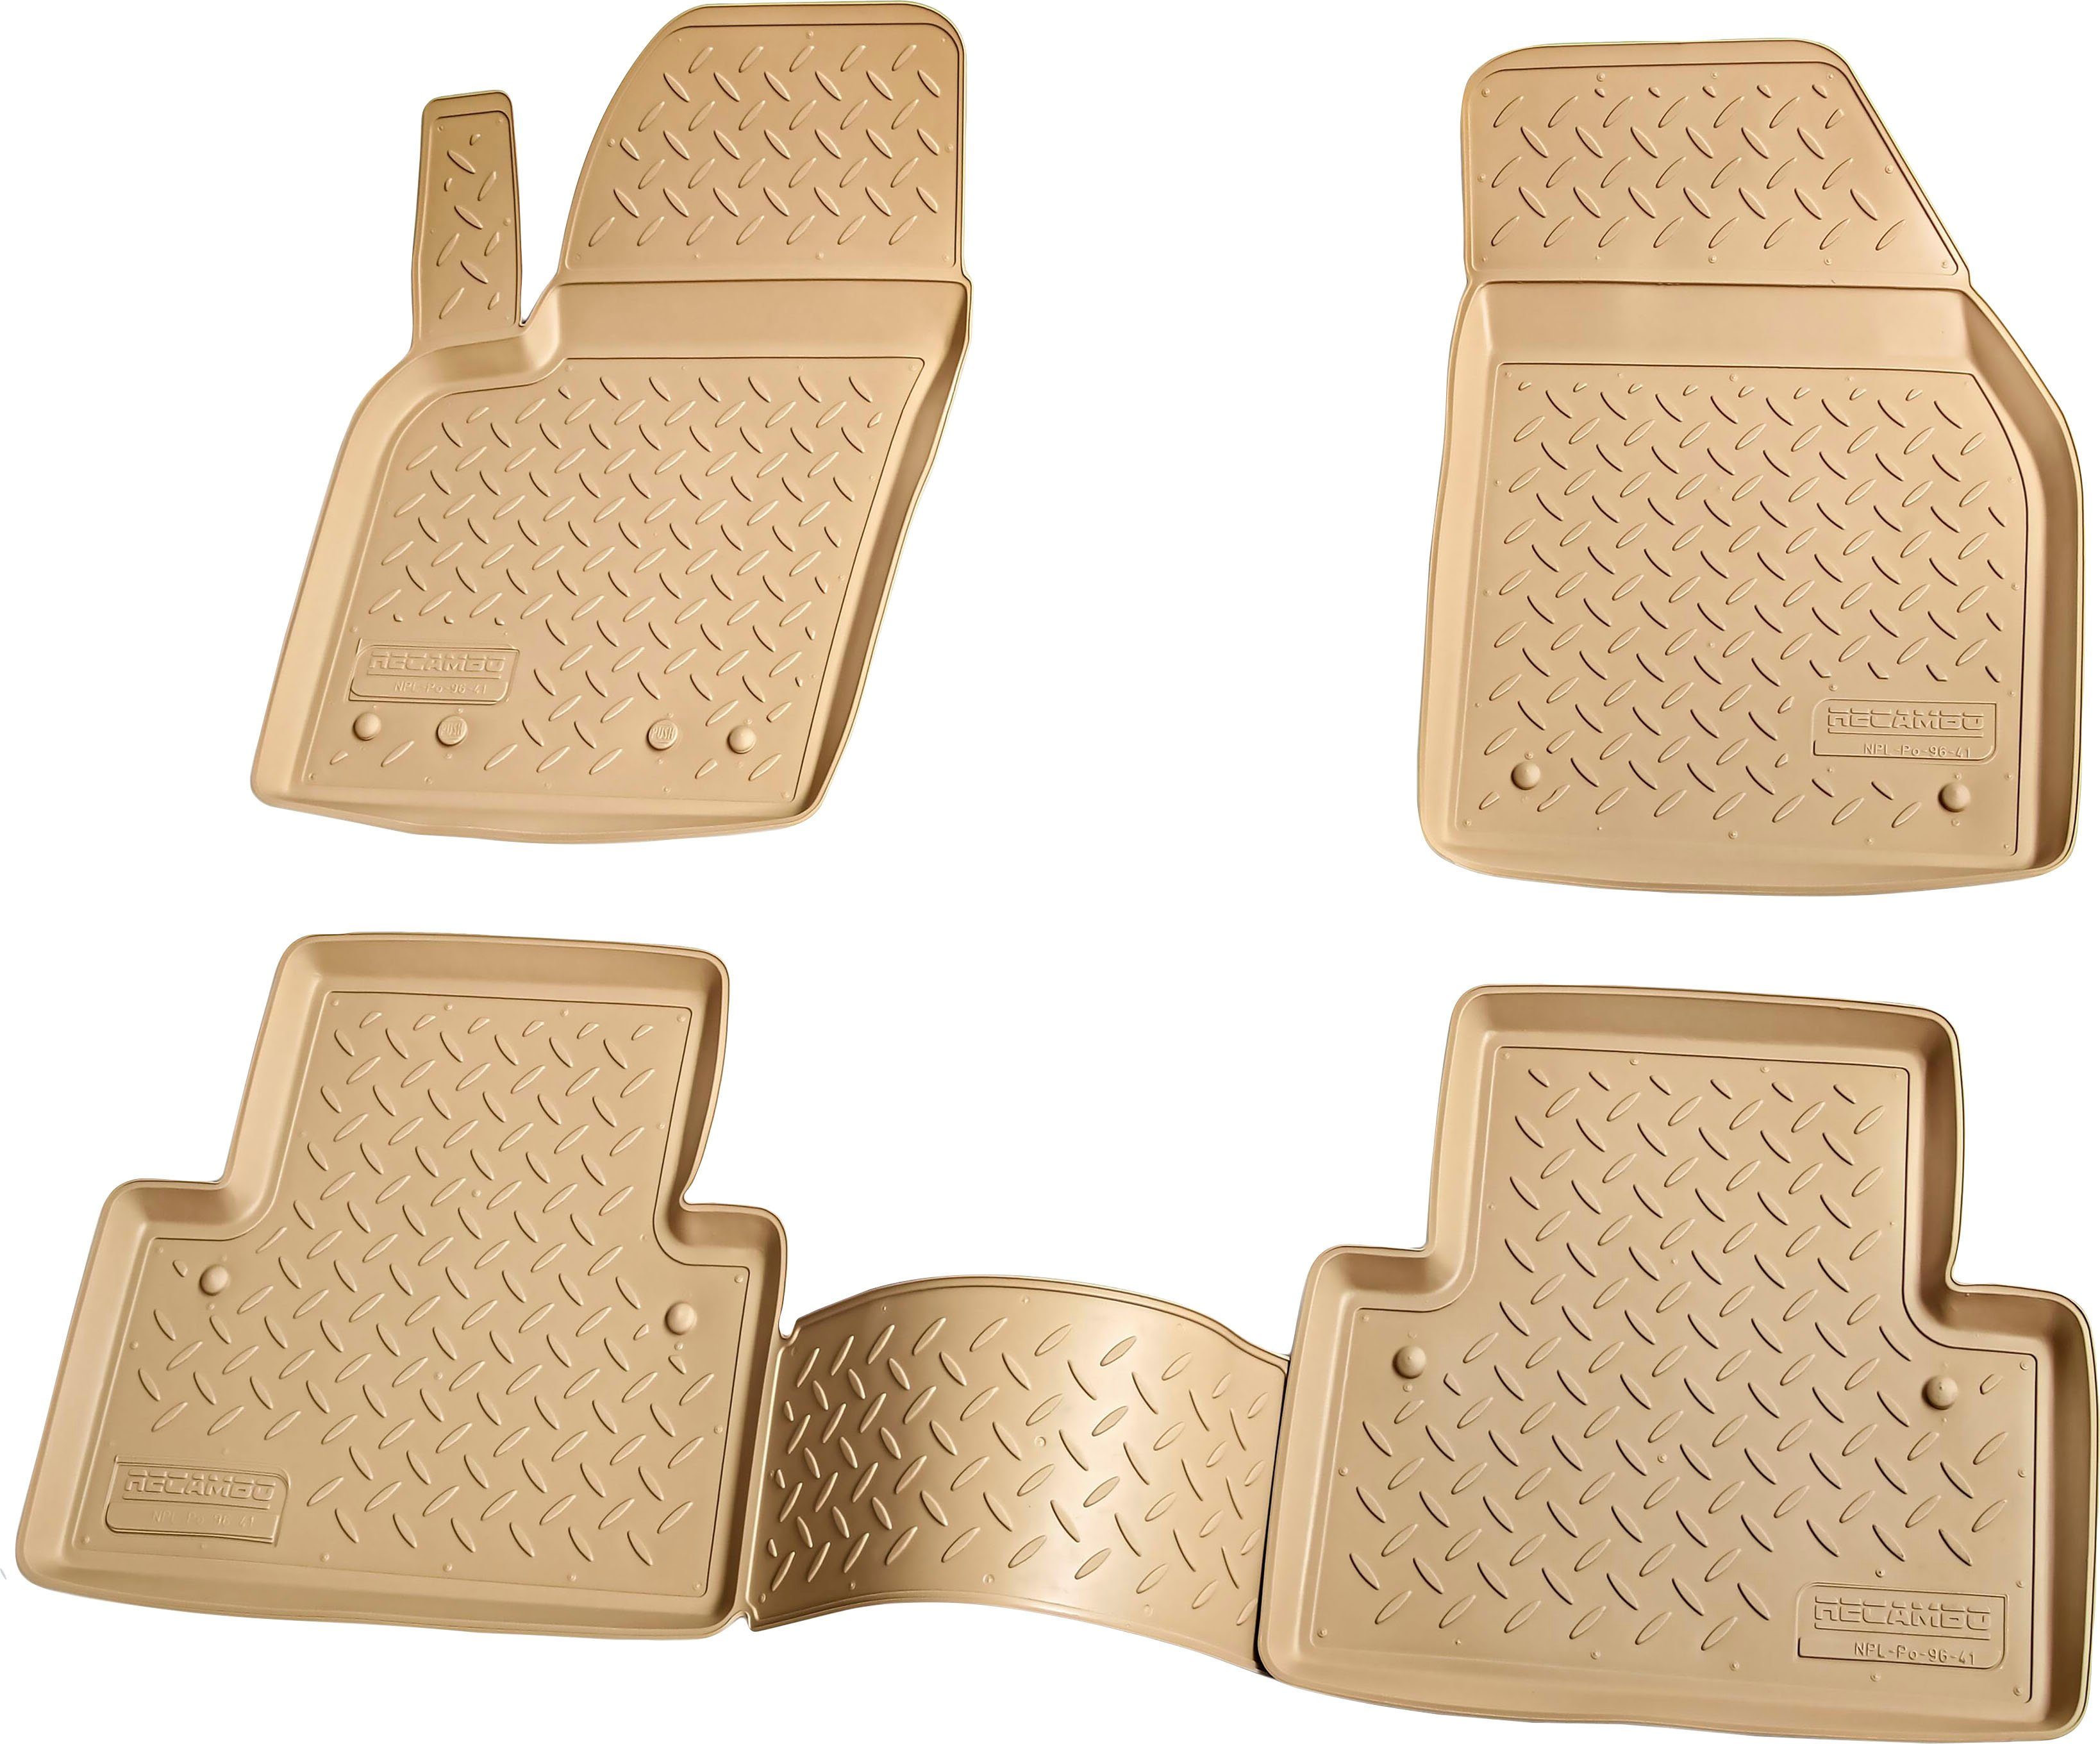 RECAMBO Passform-Fußmatten CustomComforts (4 St), für VOLVO S40, V50 2004 - 2012, perfekte Passform